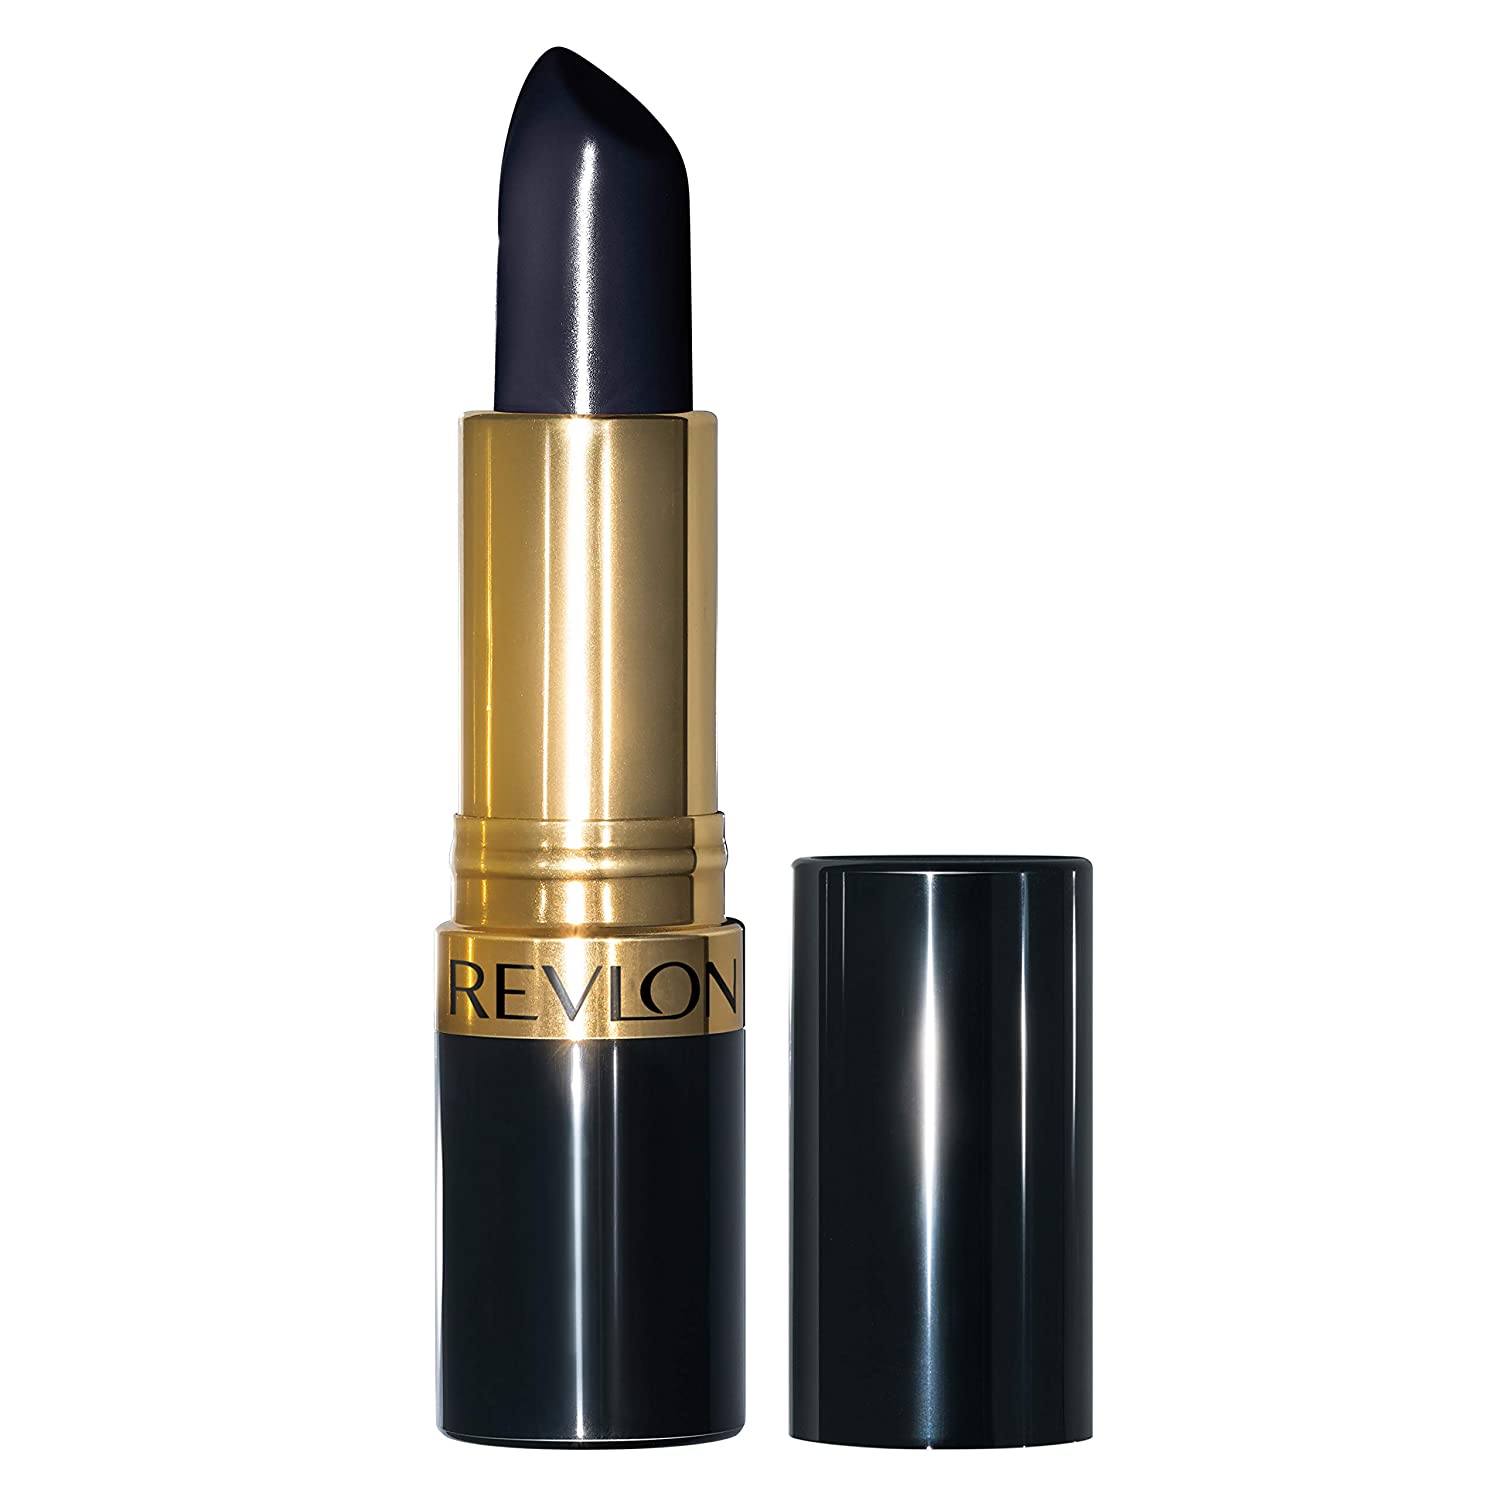 0.15-Oz Revlon Super Lustrous Lipstick (Midnight Mystery) $1.28 w/ S&S + Free S&H w/ Prime or $25+